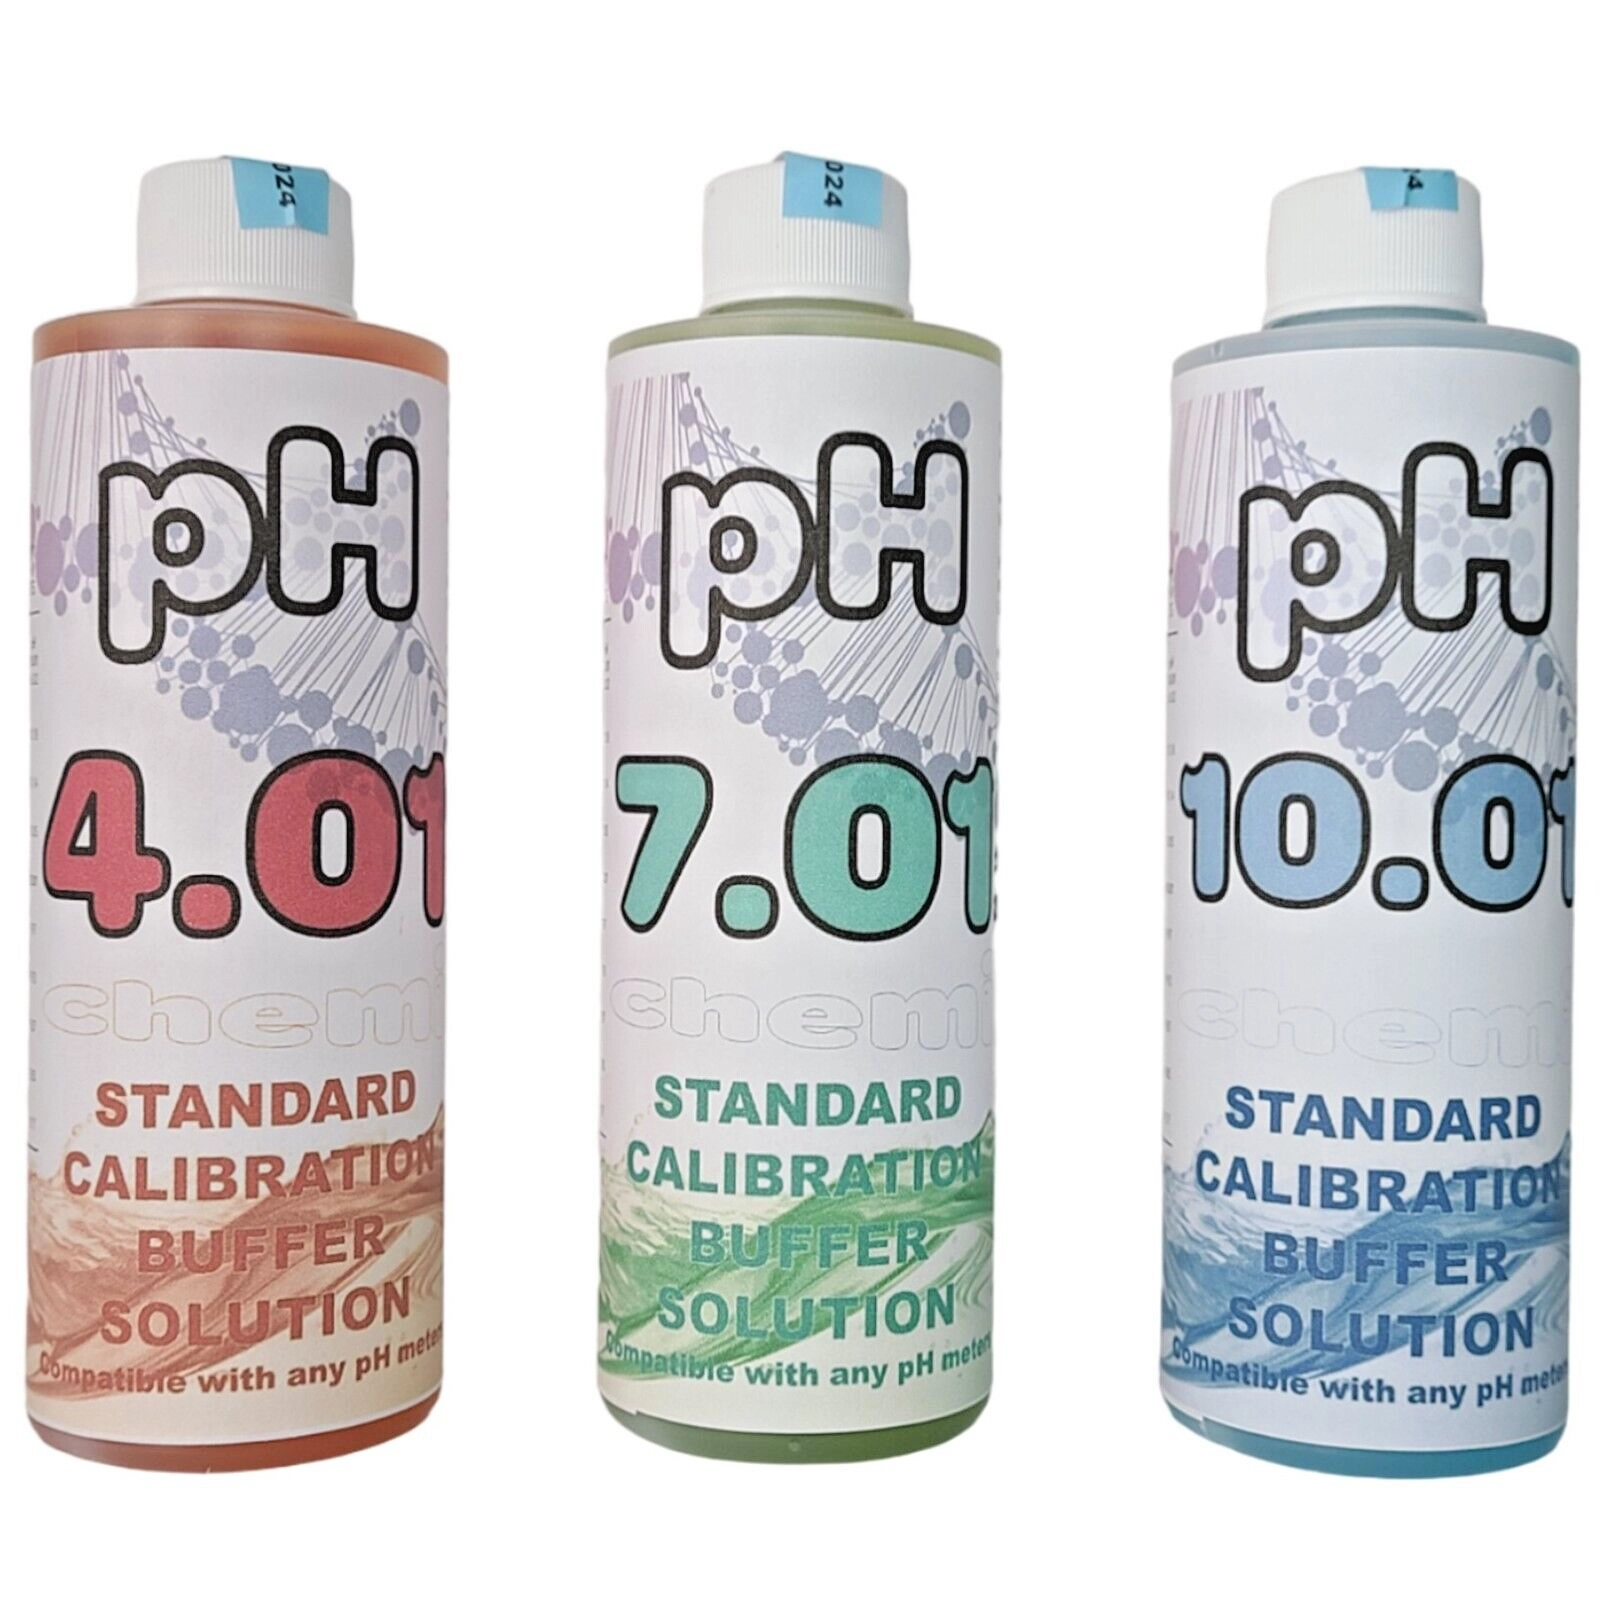 pH Standard Calibration Buffer Solution for pH Met